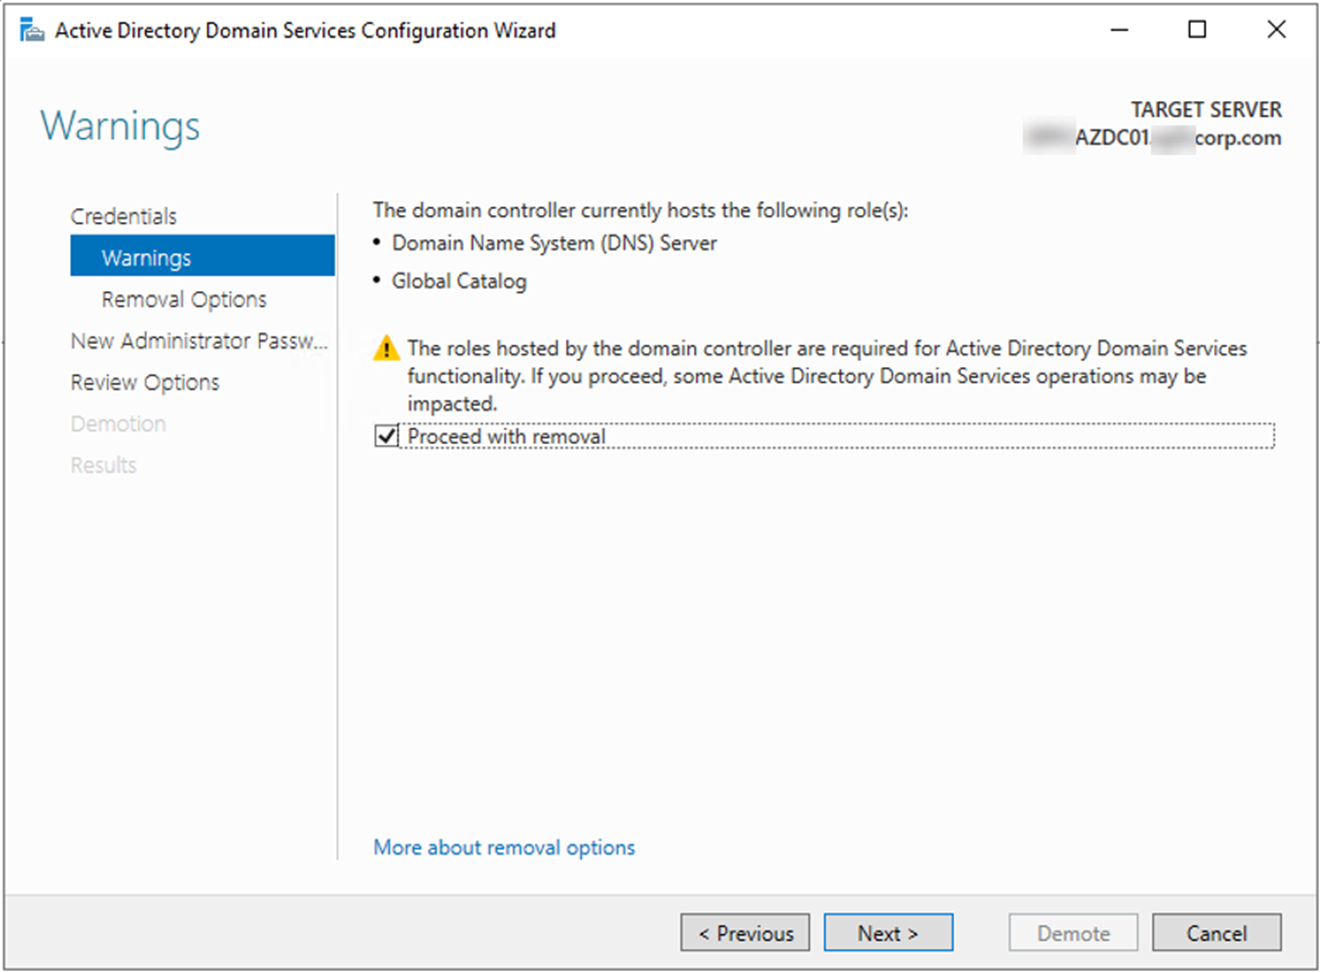 101120 0520 HowtoDemote13 - How to Demote Microsoft Windows Server 2019 Domain Controller Virtual Machine at Azure